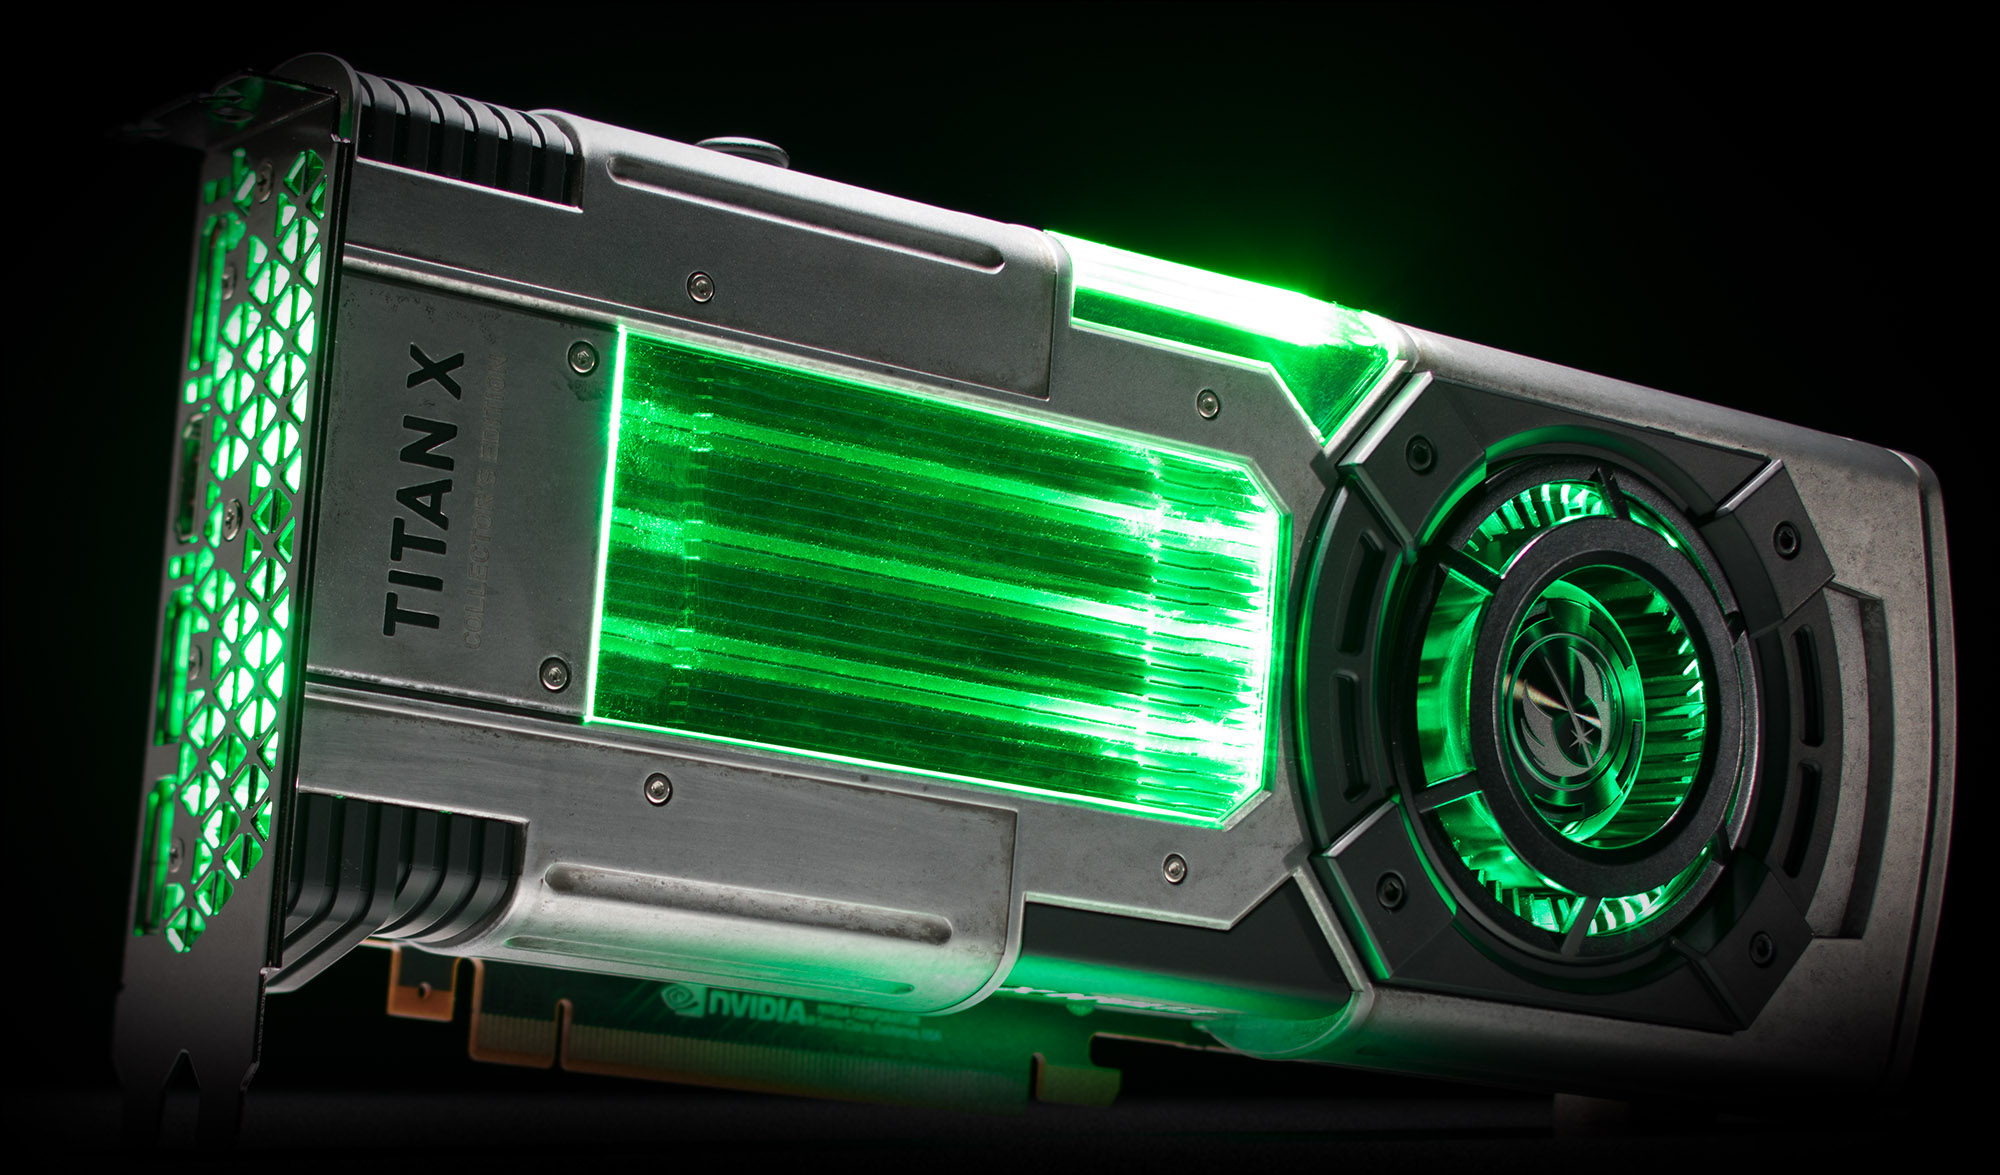 12,960円NVIDIA GeForce GTX Titan Xp